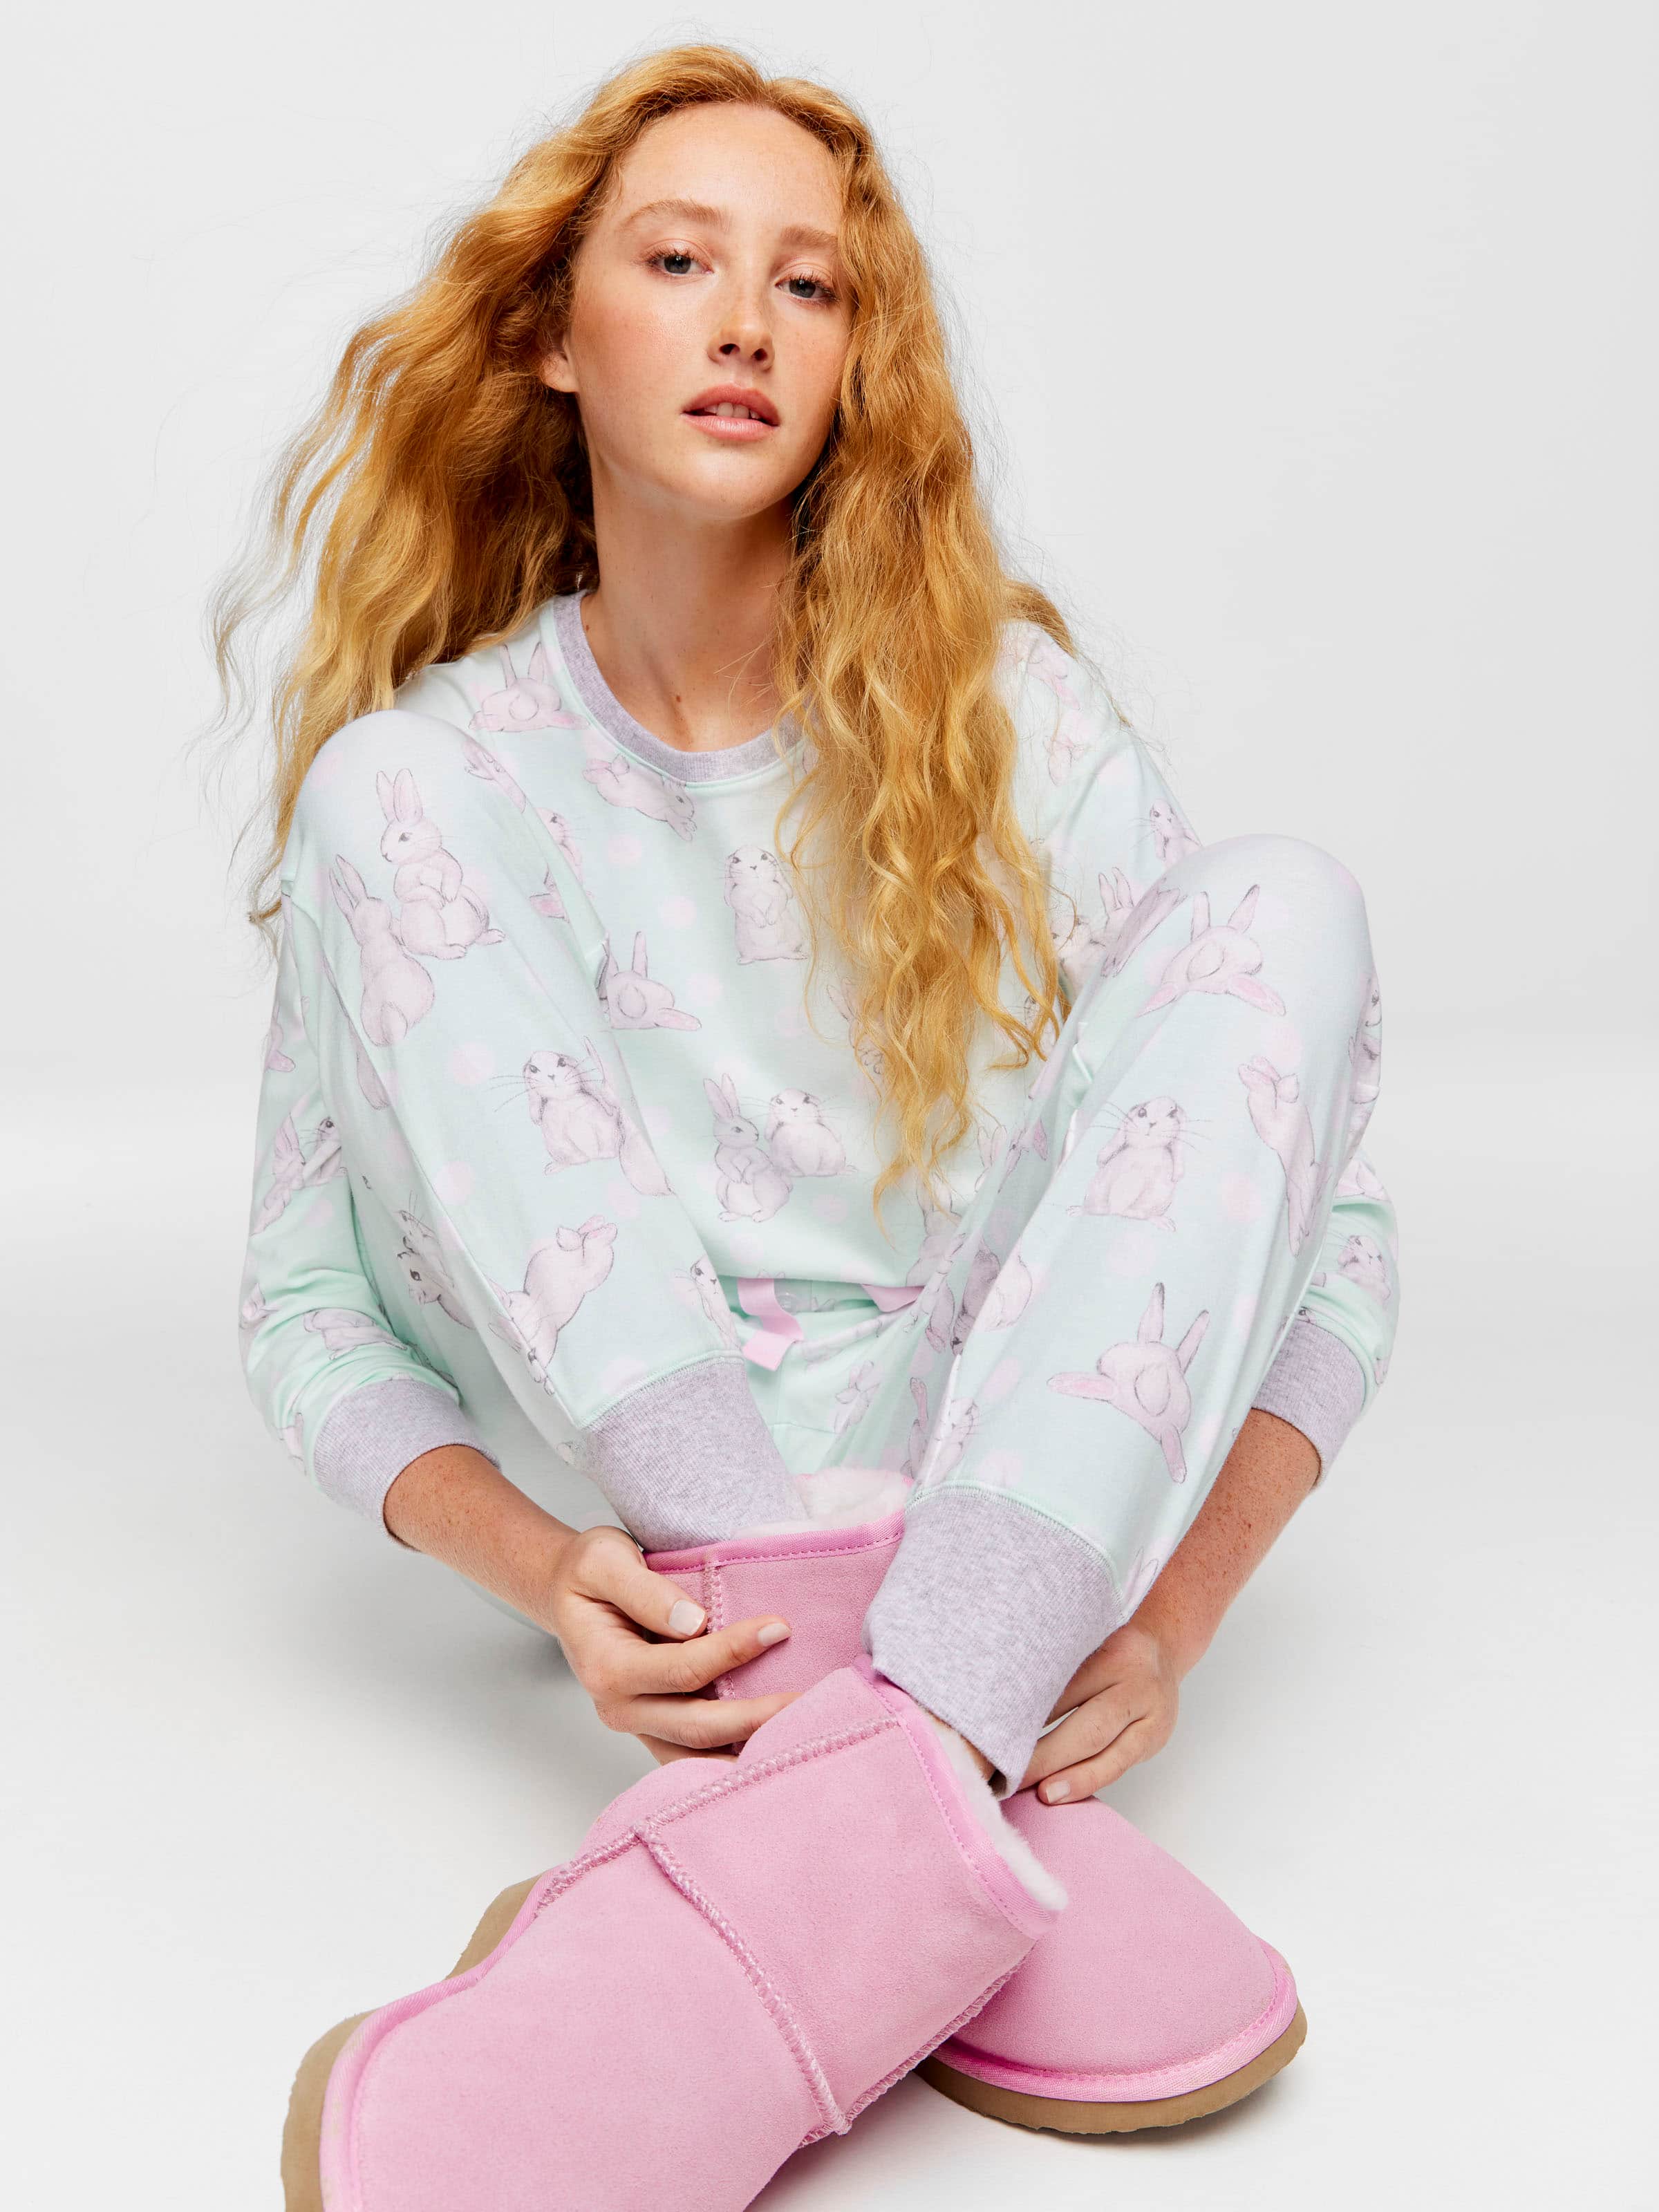 100% Cotton PJ Pants Women Soft Sleep Pants Cute Pink Pjs Lounge